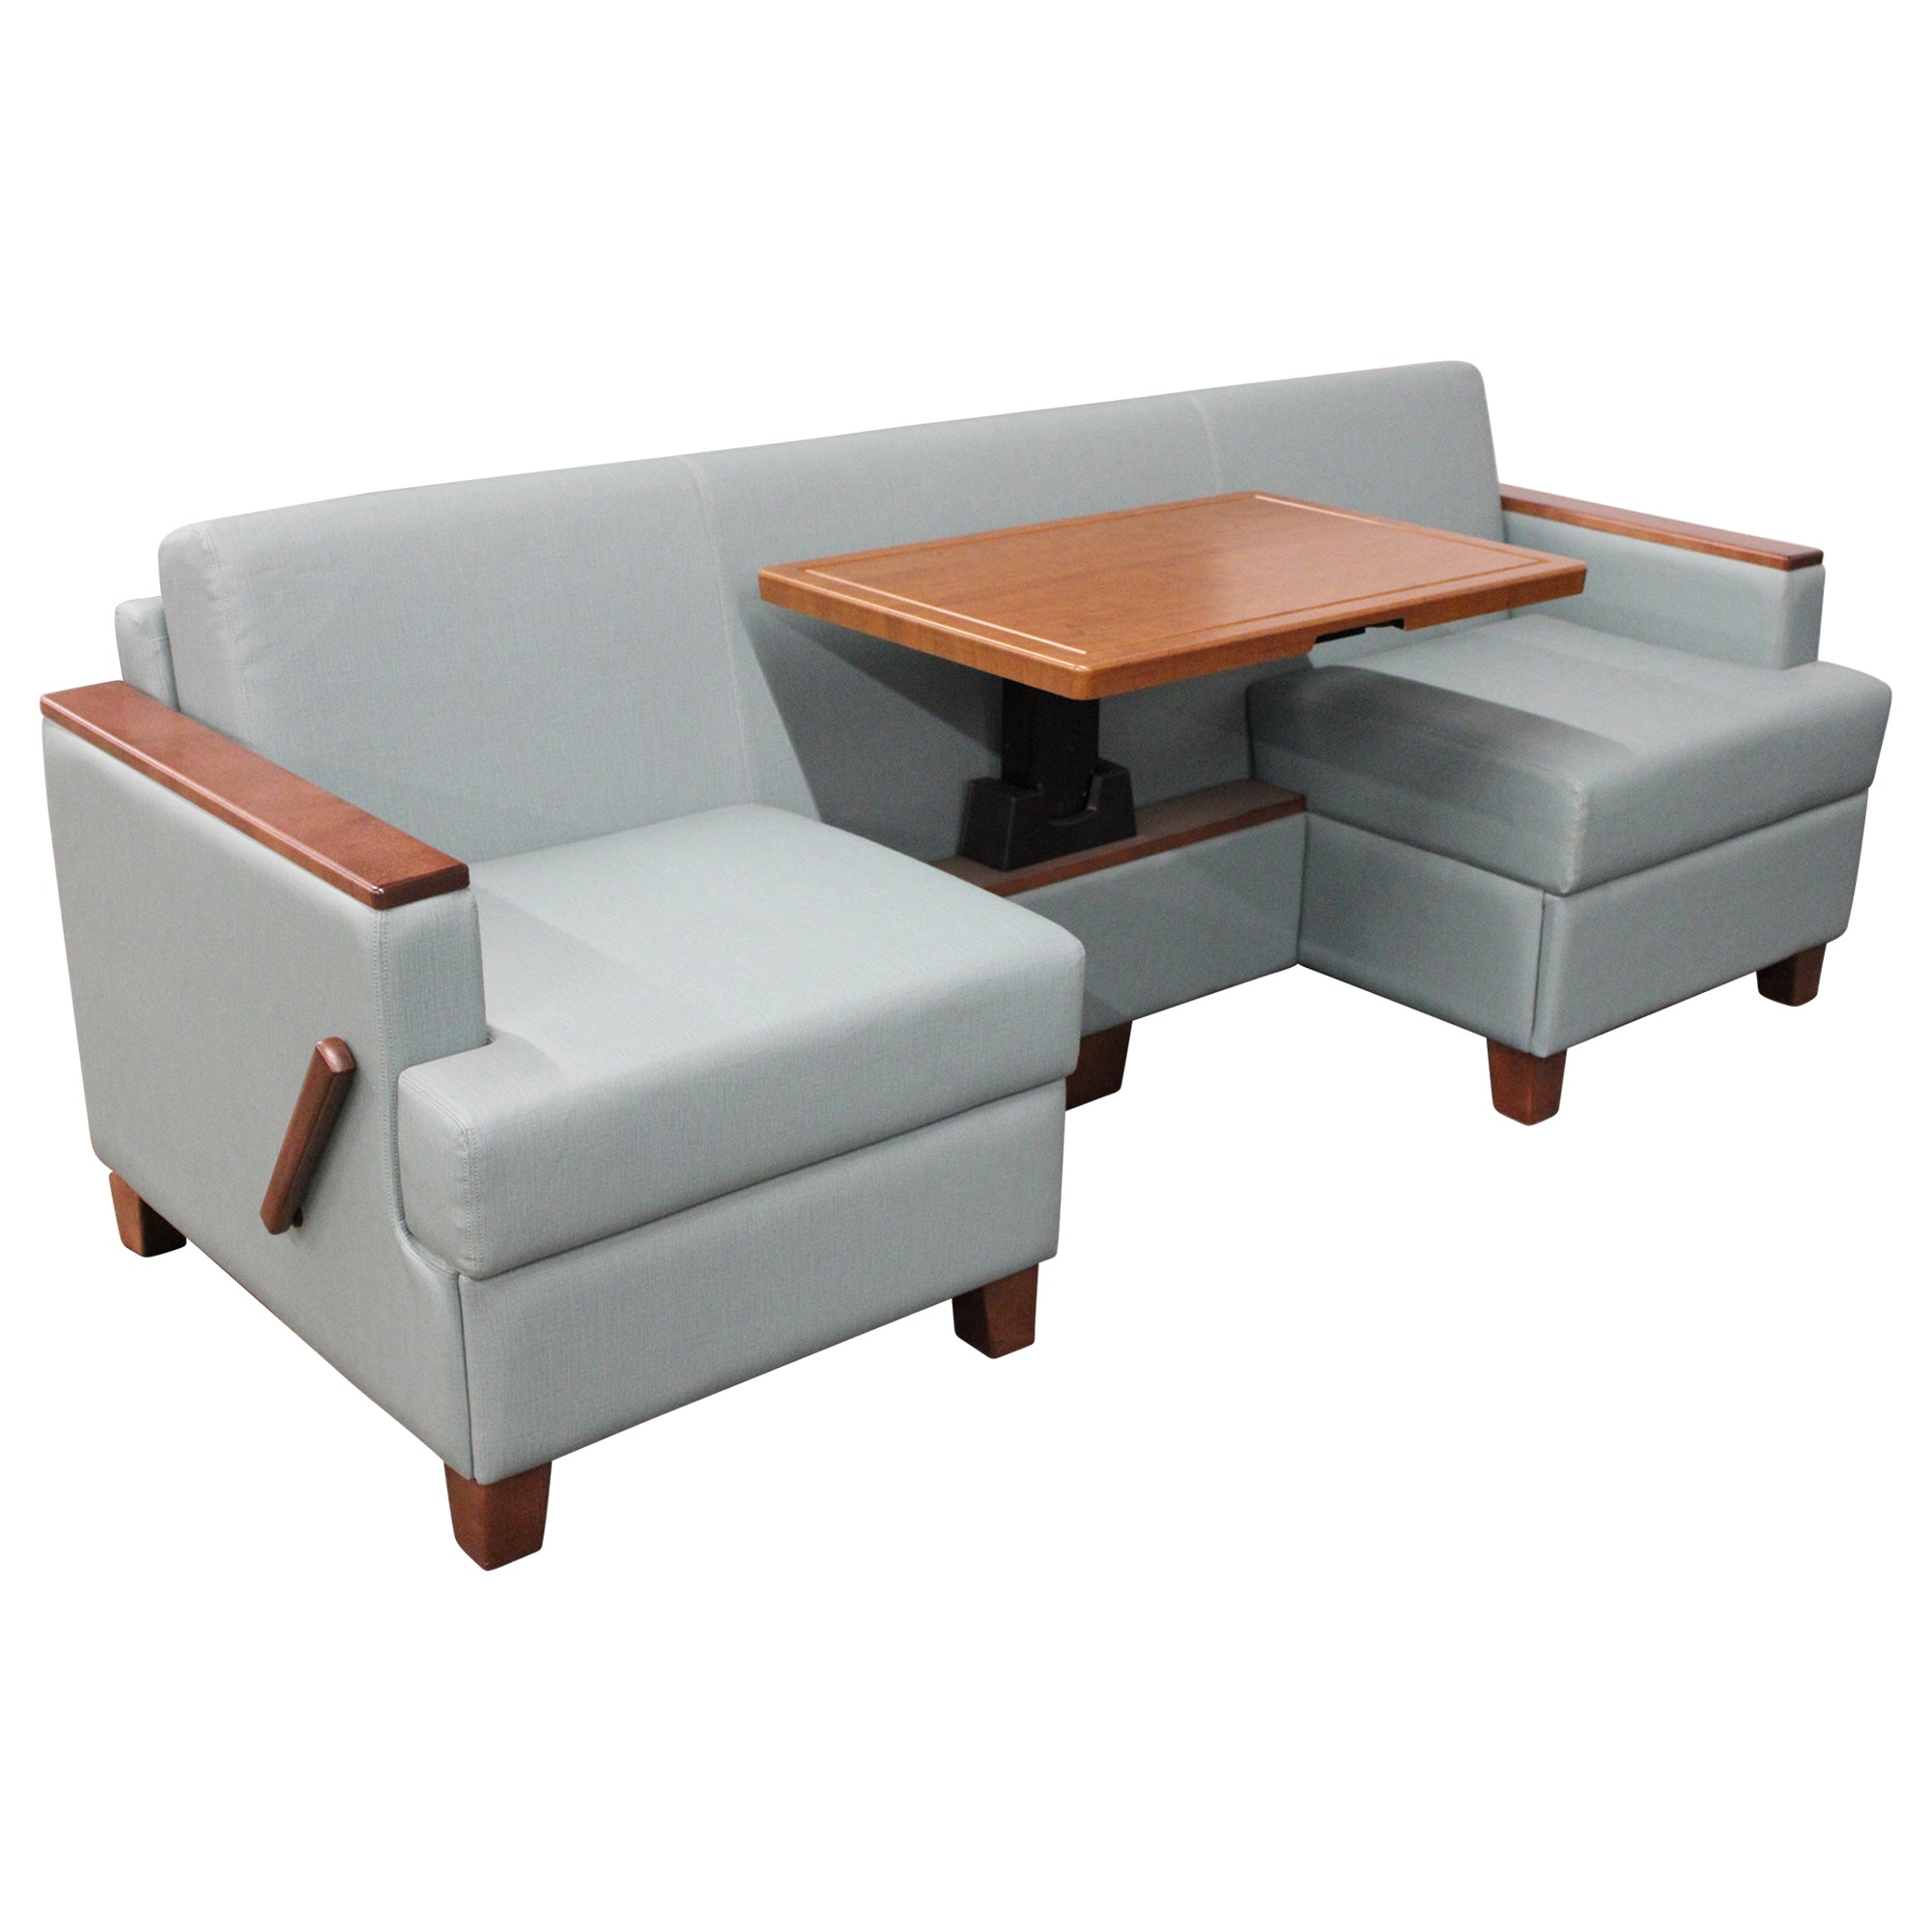 Wieland SleepToo Sofa with Table, Blue - Preowned